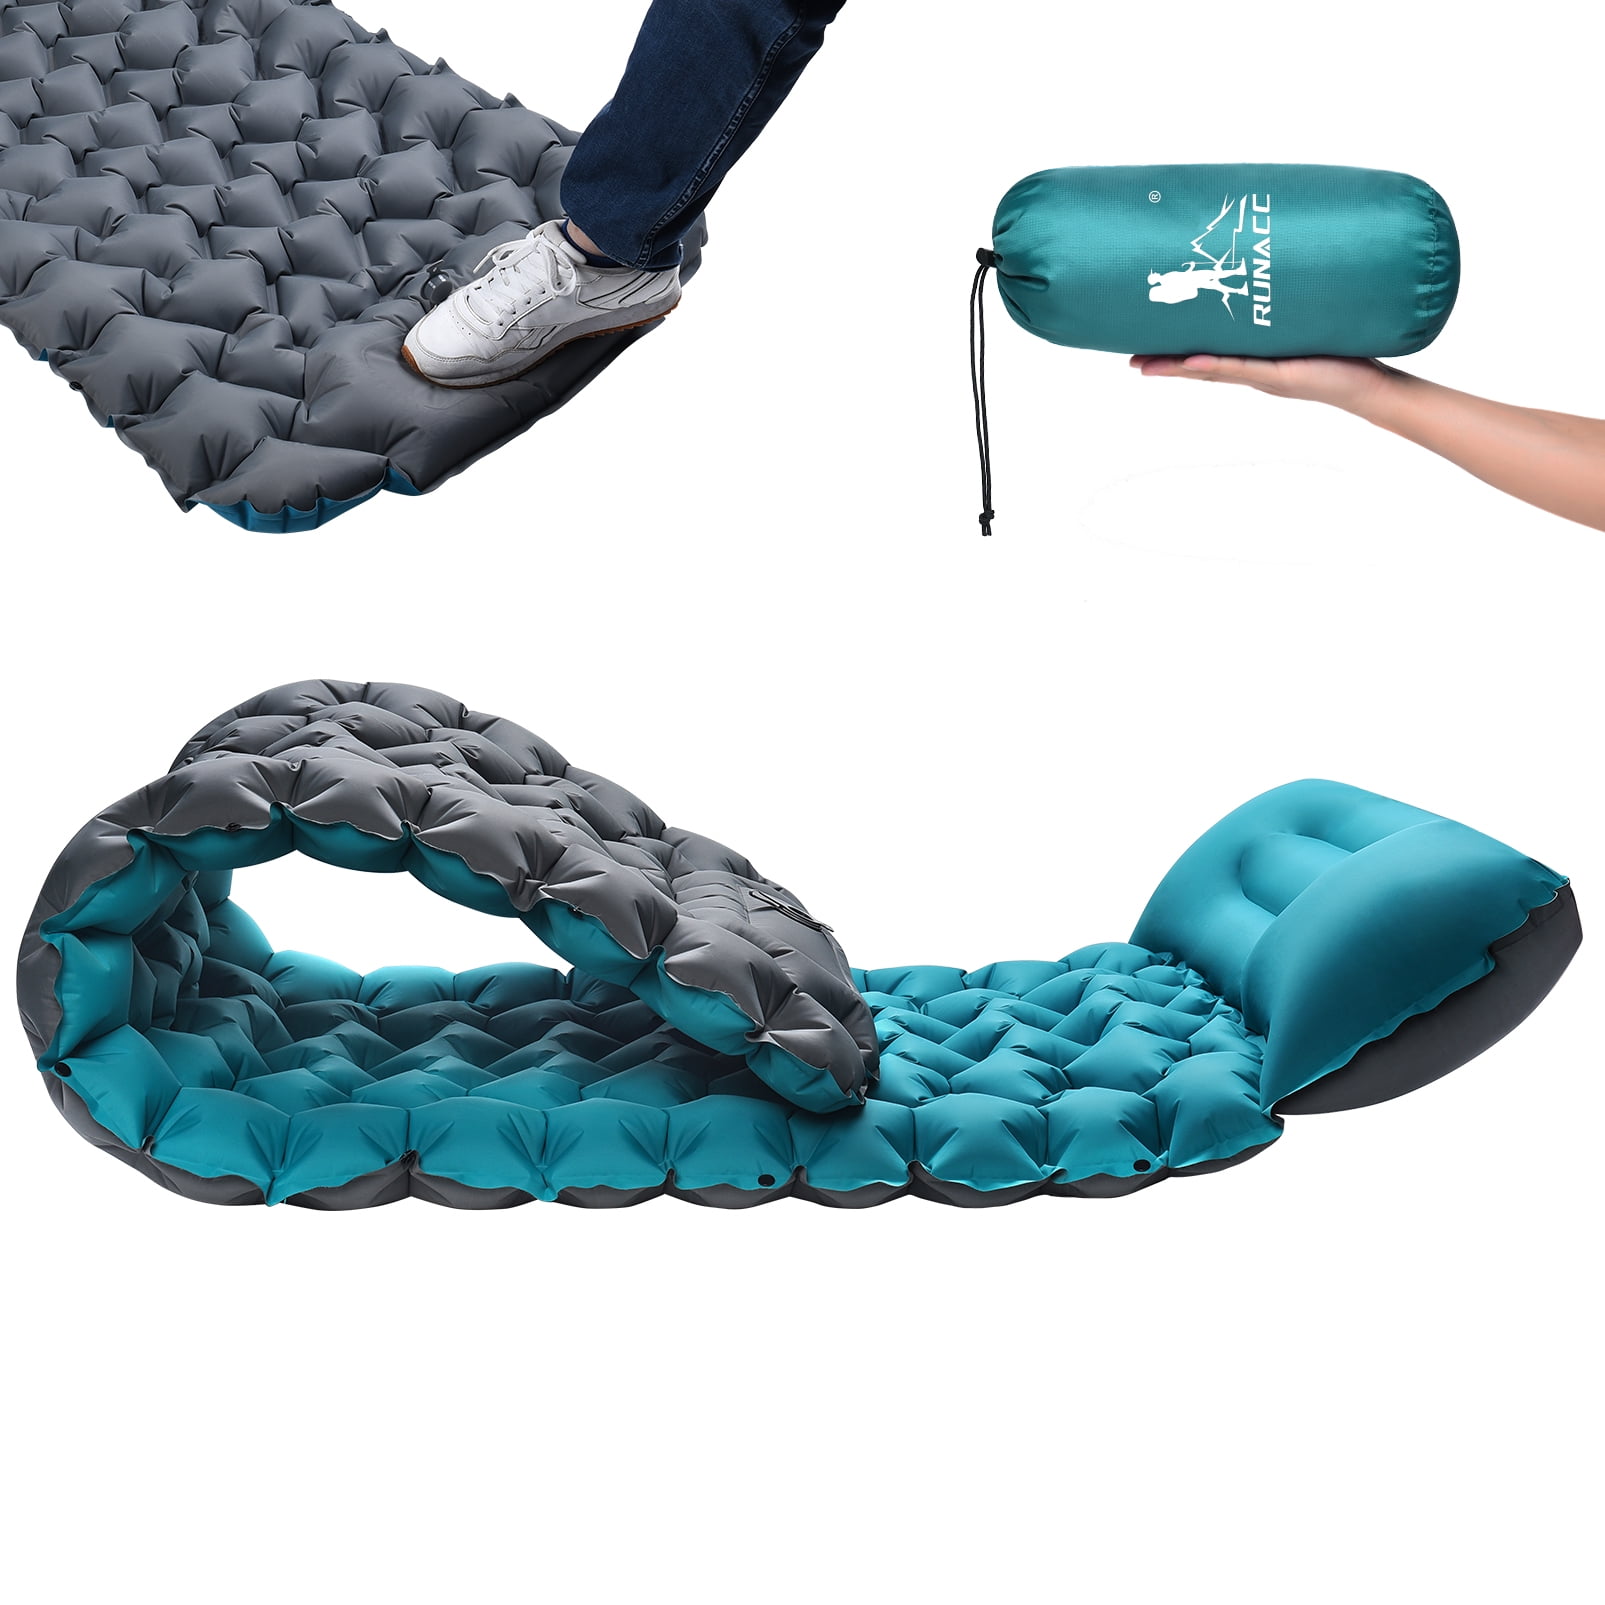 Camping Sleeping Mat with Built-in Sponge Pump 79.5’’ x Blue Sleeping Pad